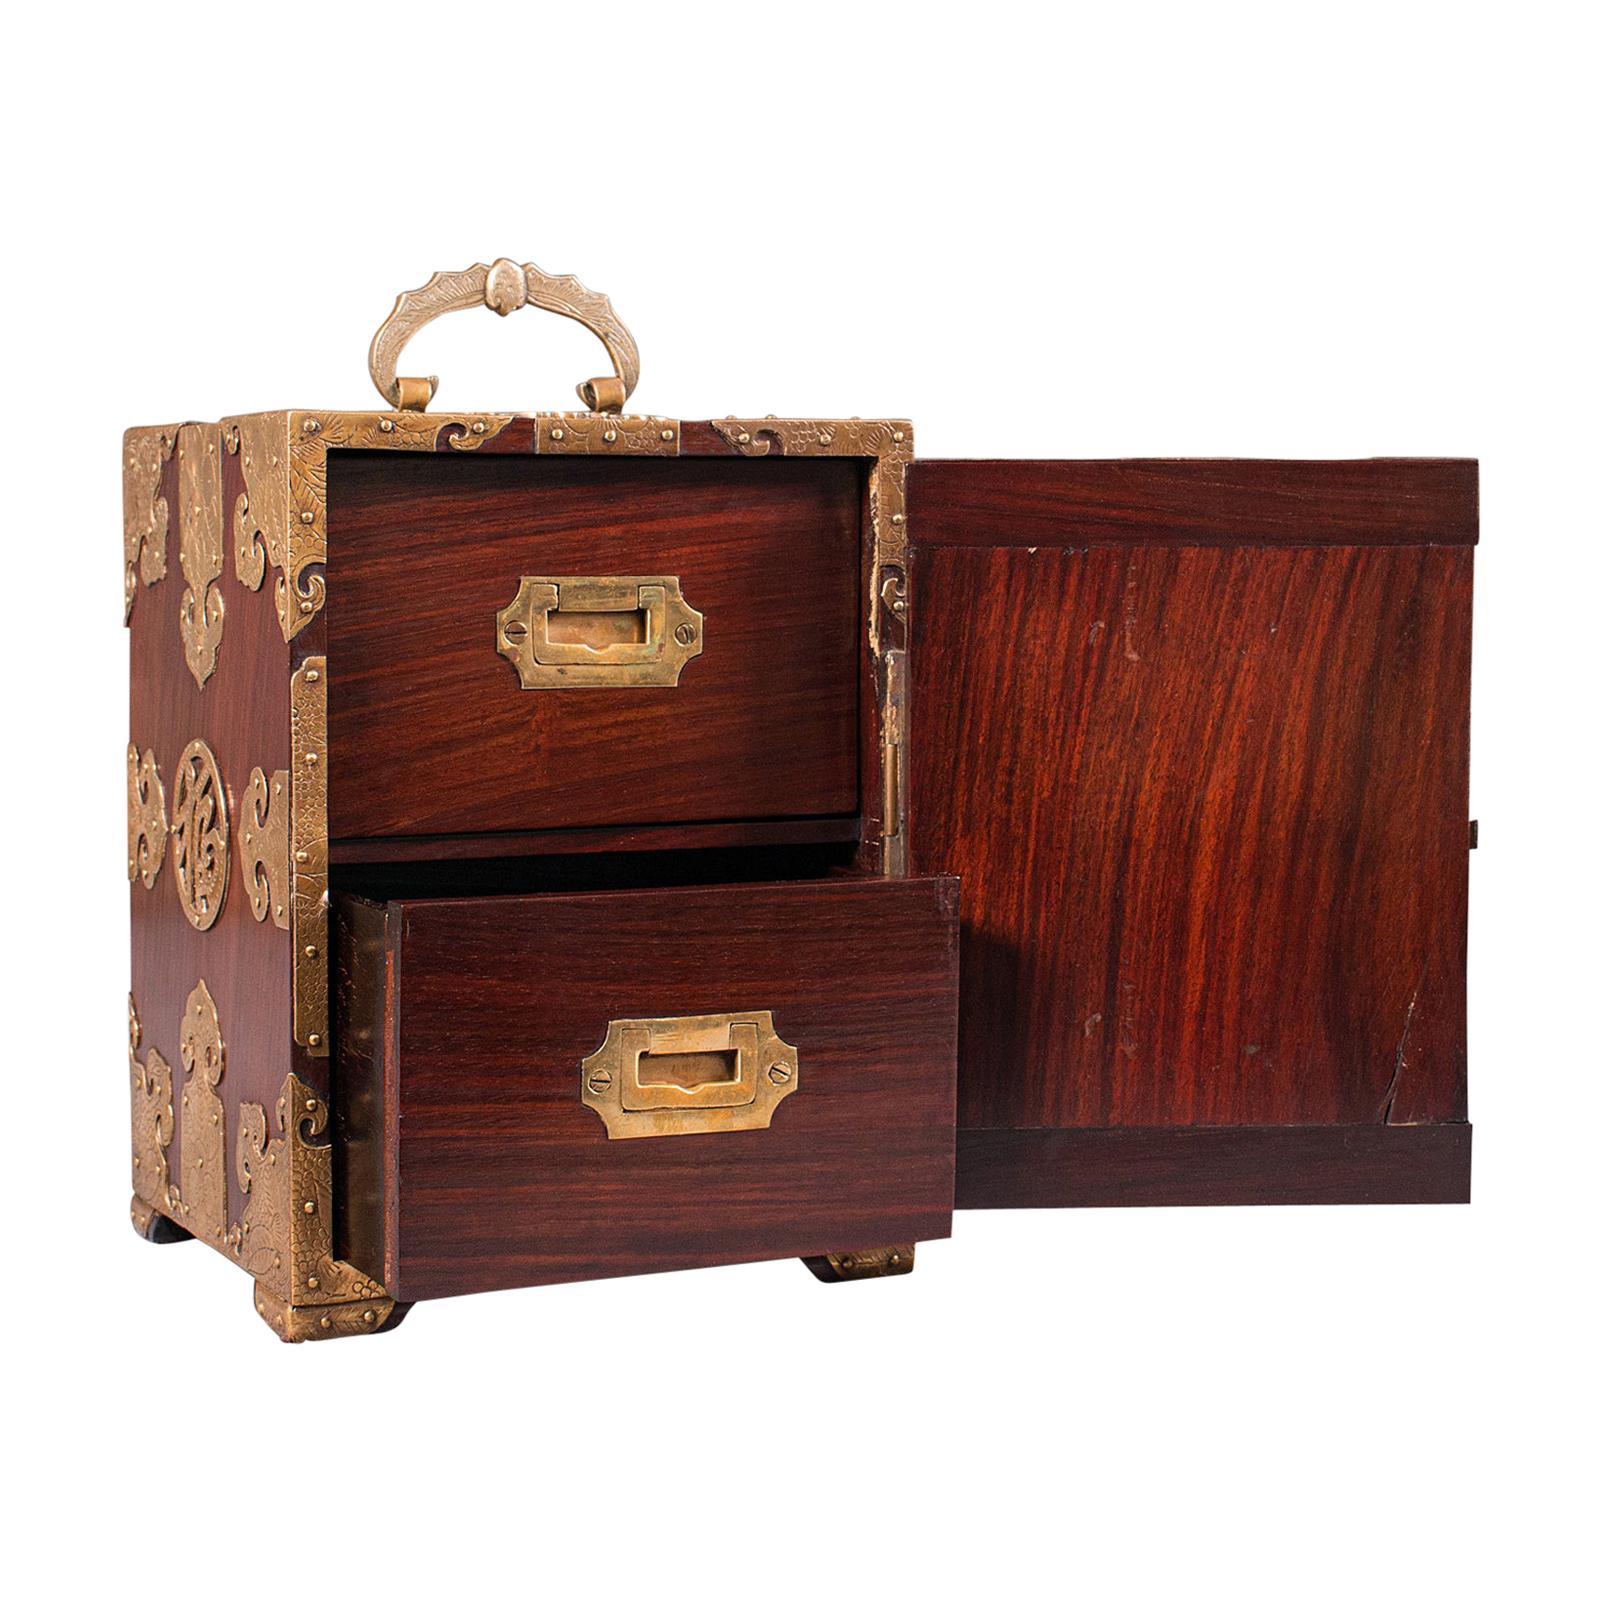 Antique Collector's Box, Chinese, Rosewood, Decorative Specimen Case, Circa 1920